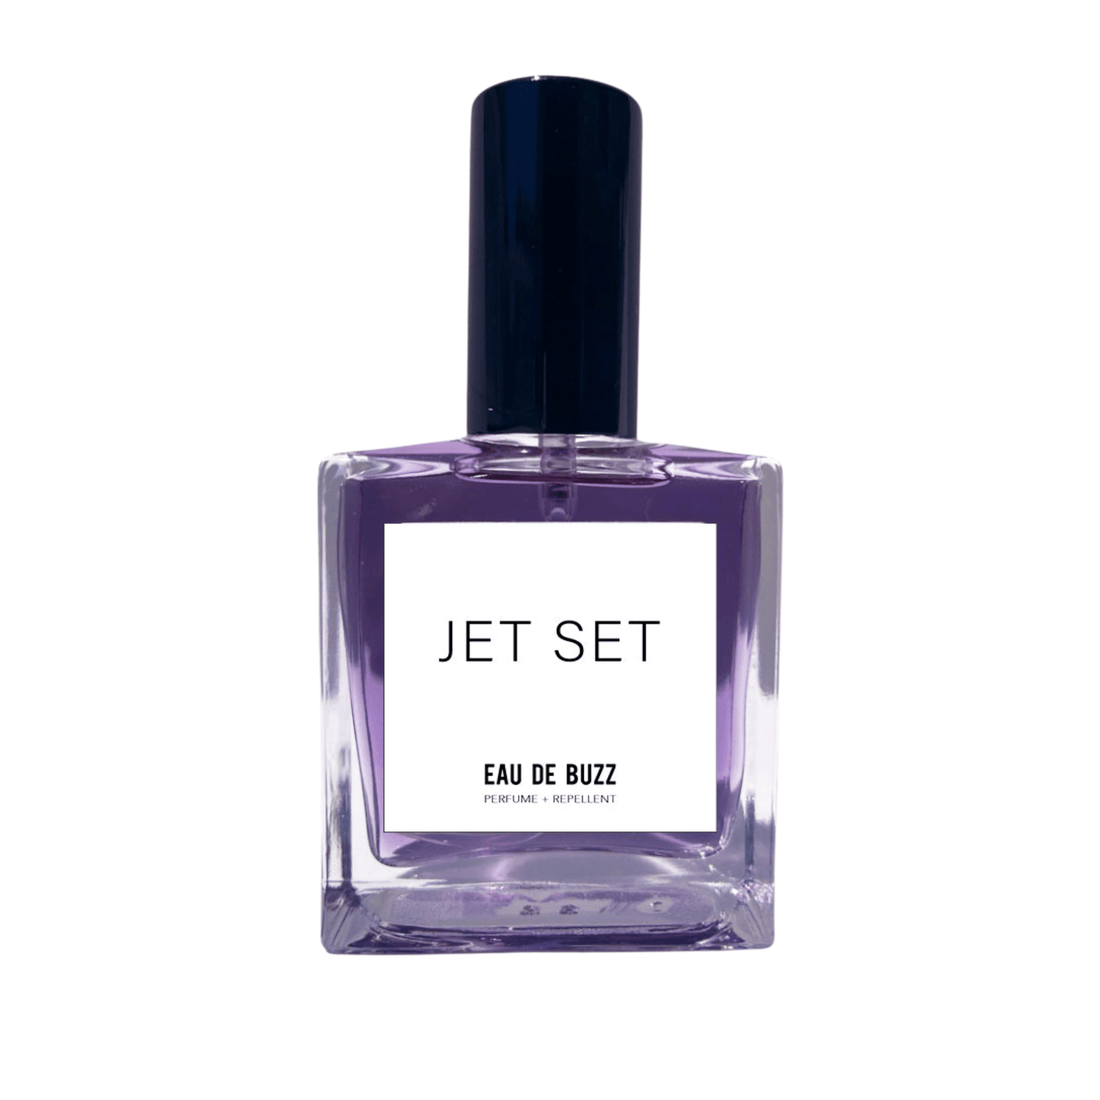 Jet Set Eau de Buz Perfume and Repellent - The Look and Co